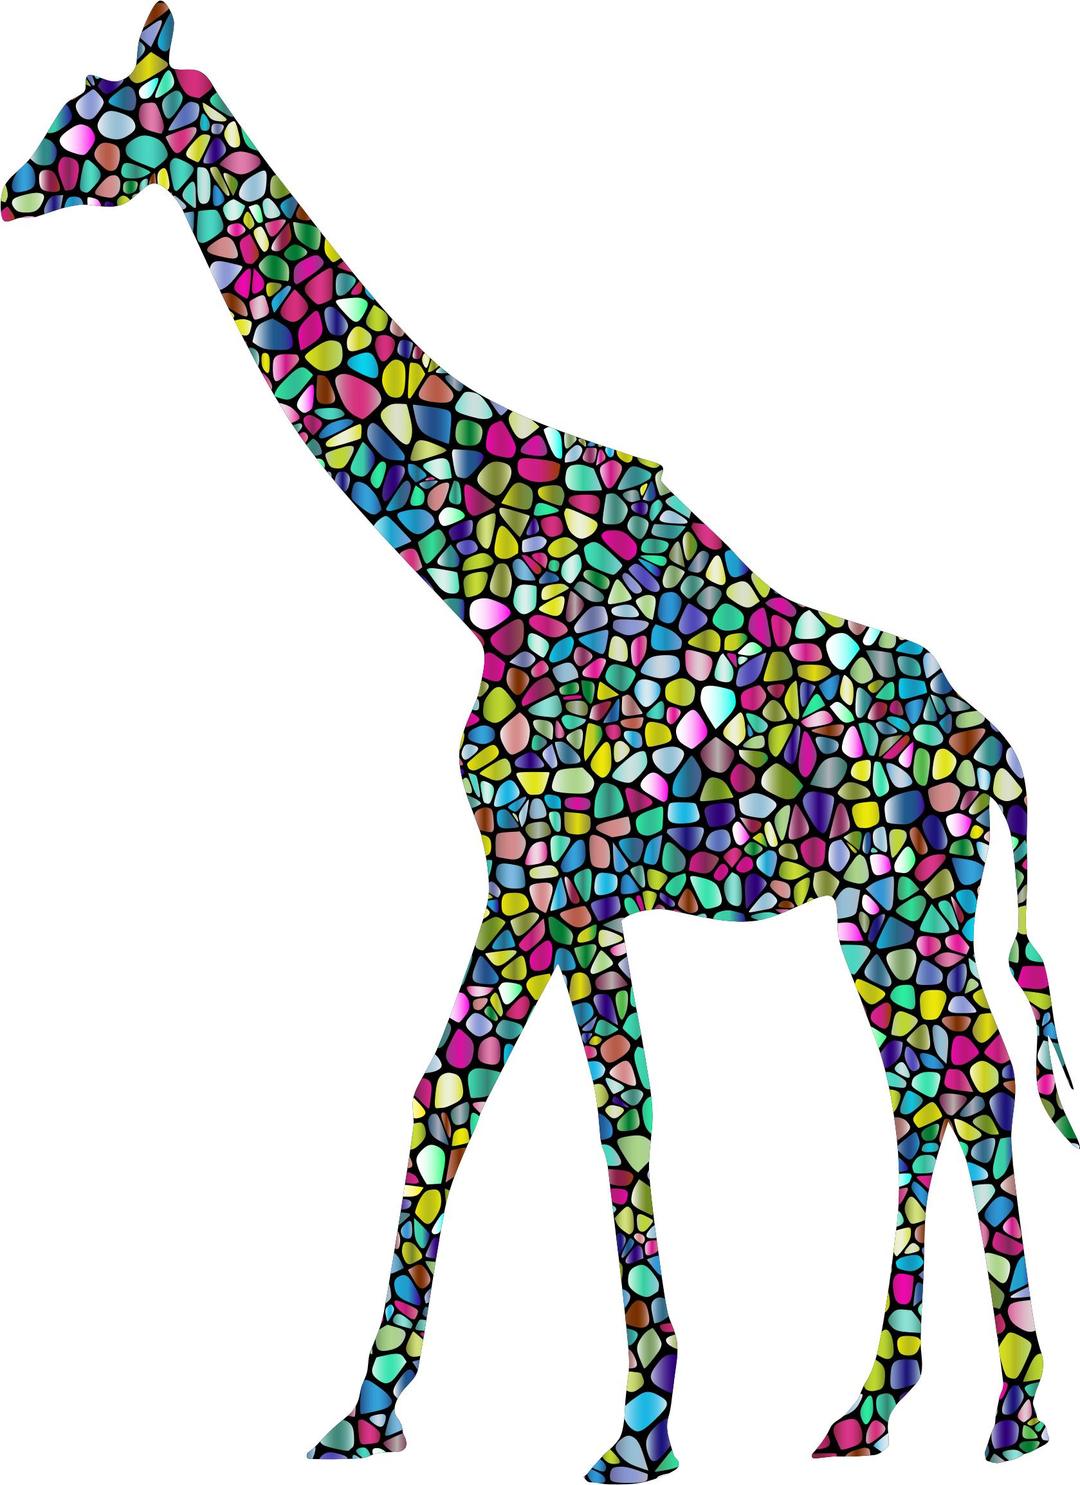 Polyprismatic Tiled Giraffe Landscape Silhouette Minus Landscape With Background png transparent